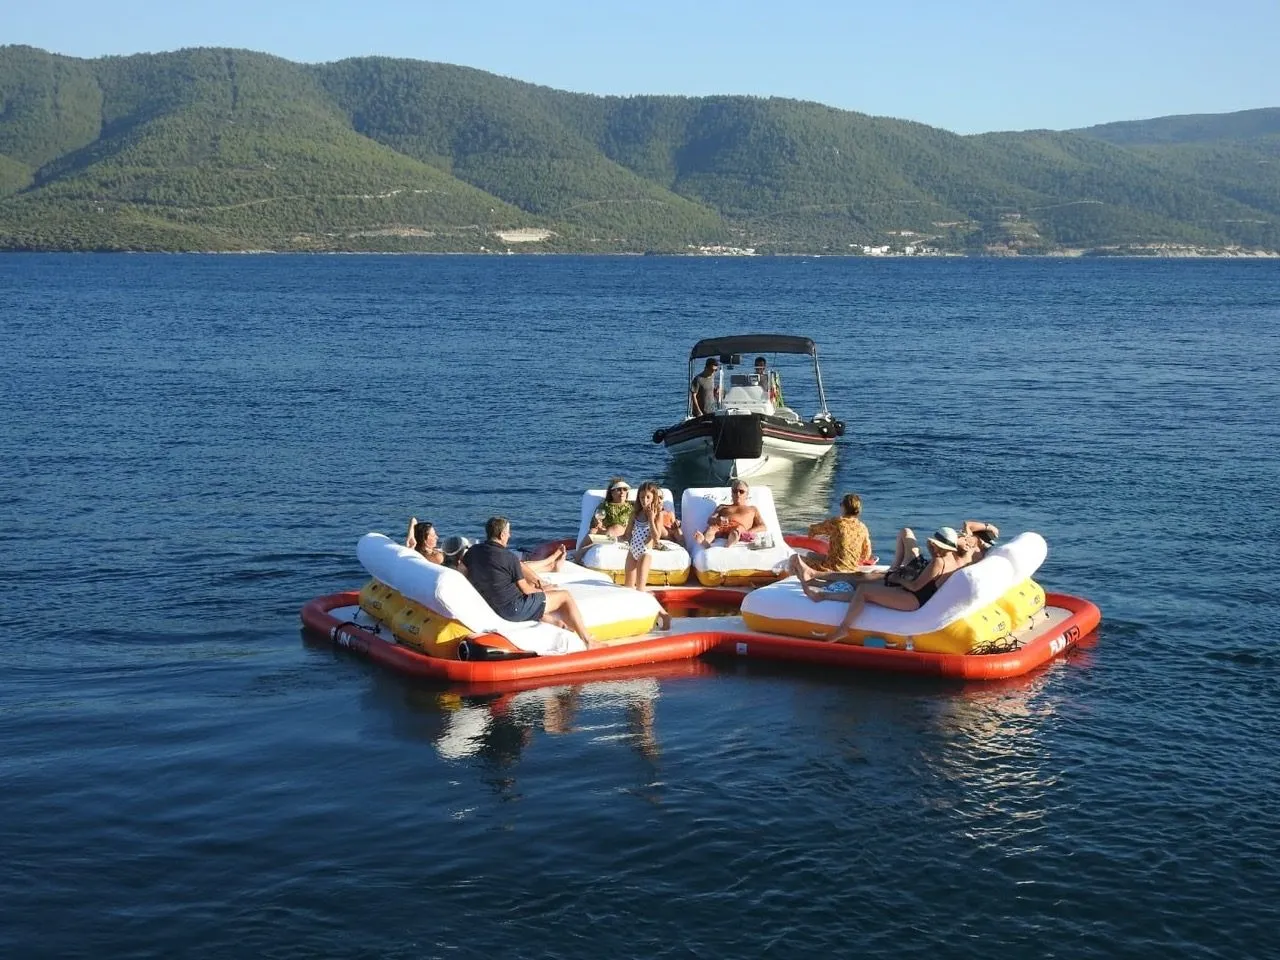 The custom FunAir Floating Island from SY Take It Easier